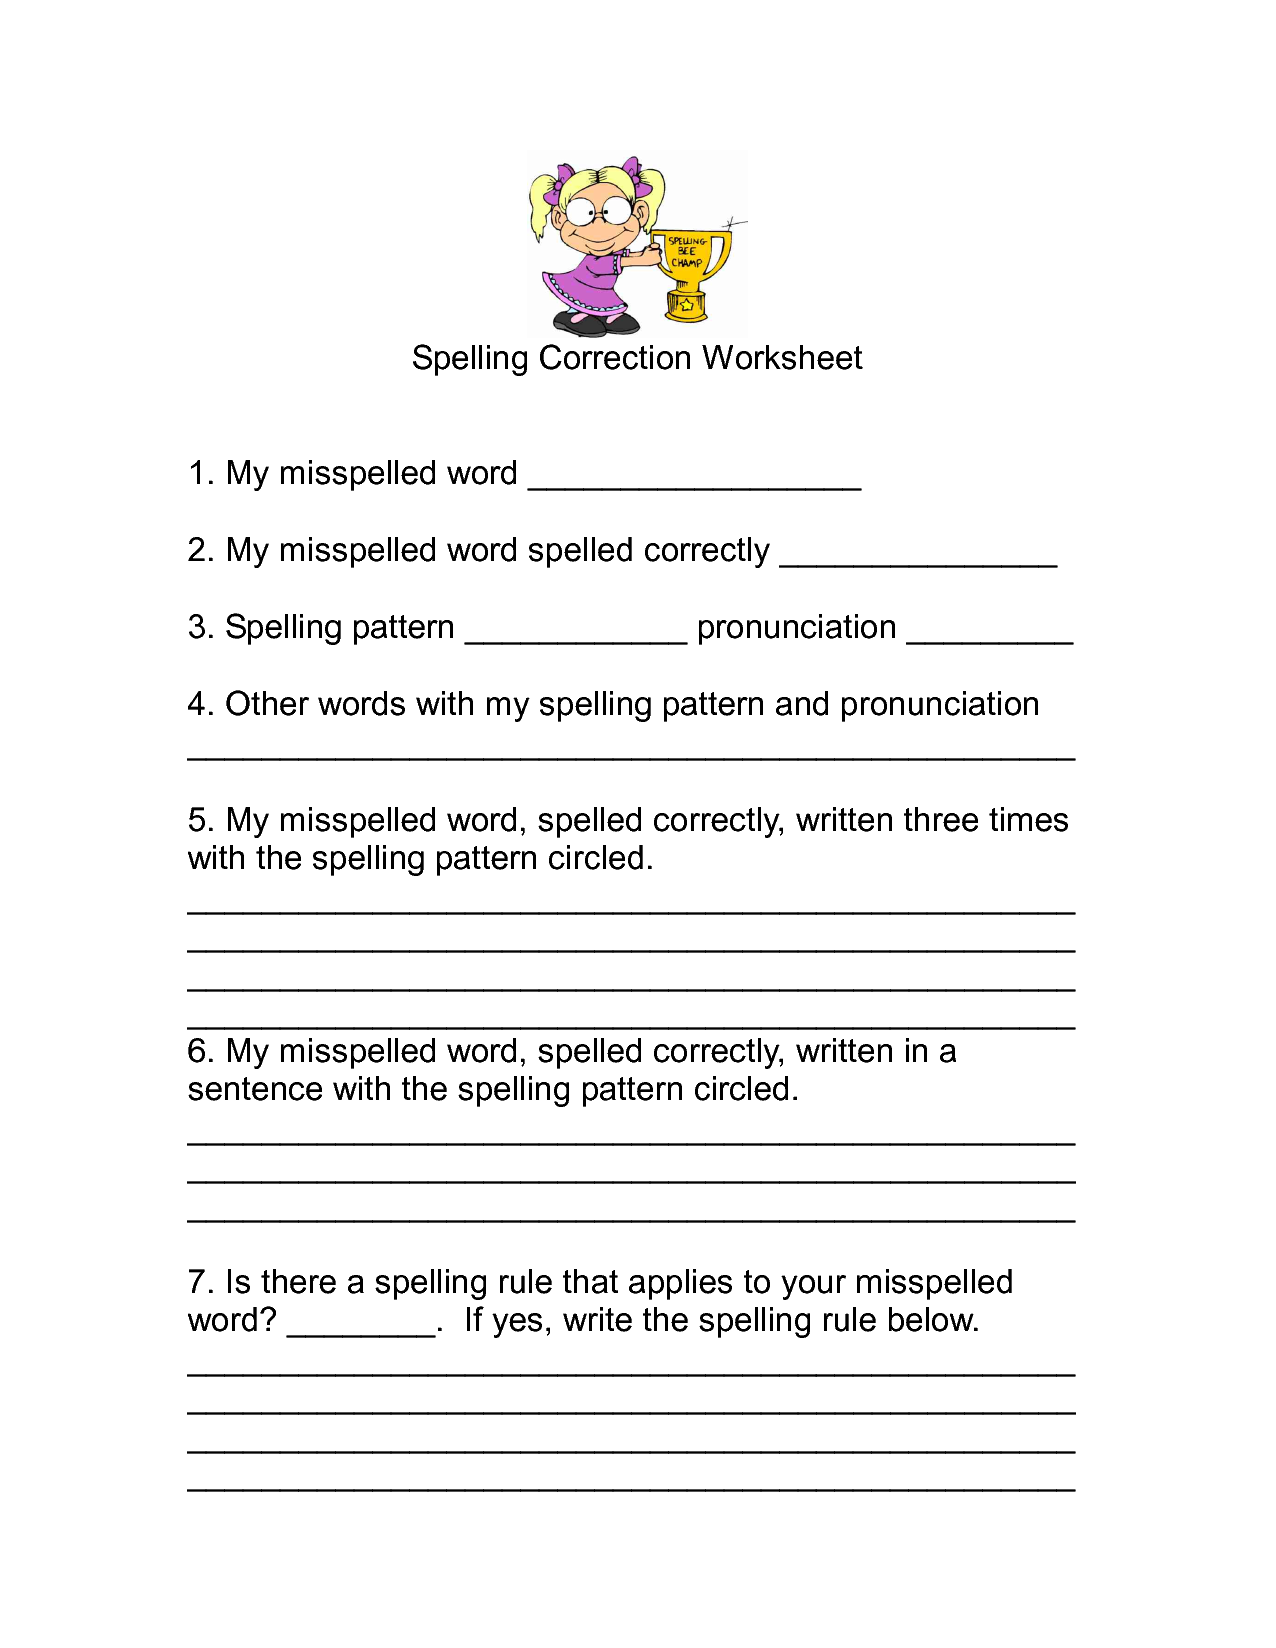 15 Best Images of 2nd Grade Sentence Correction Worksheets  2nd Grade Writing Worksheets 